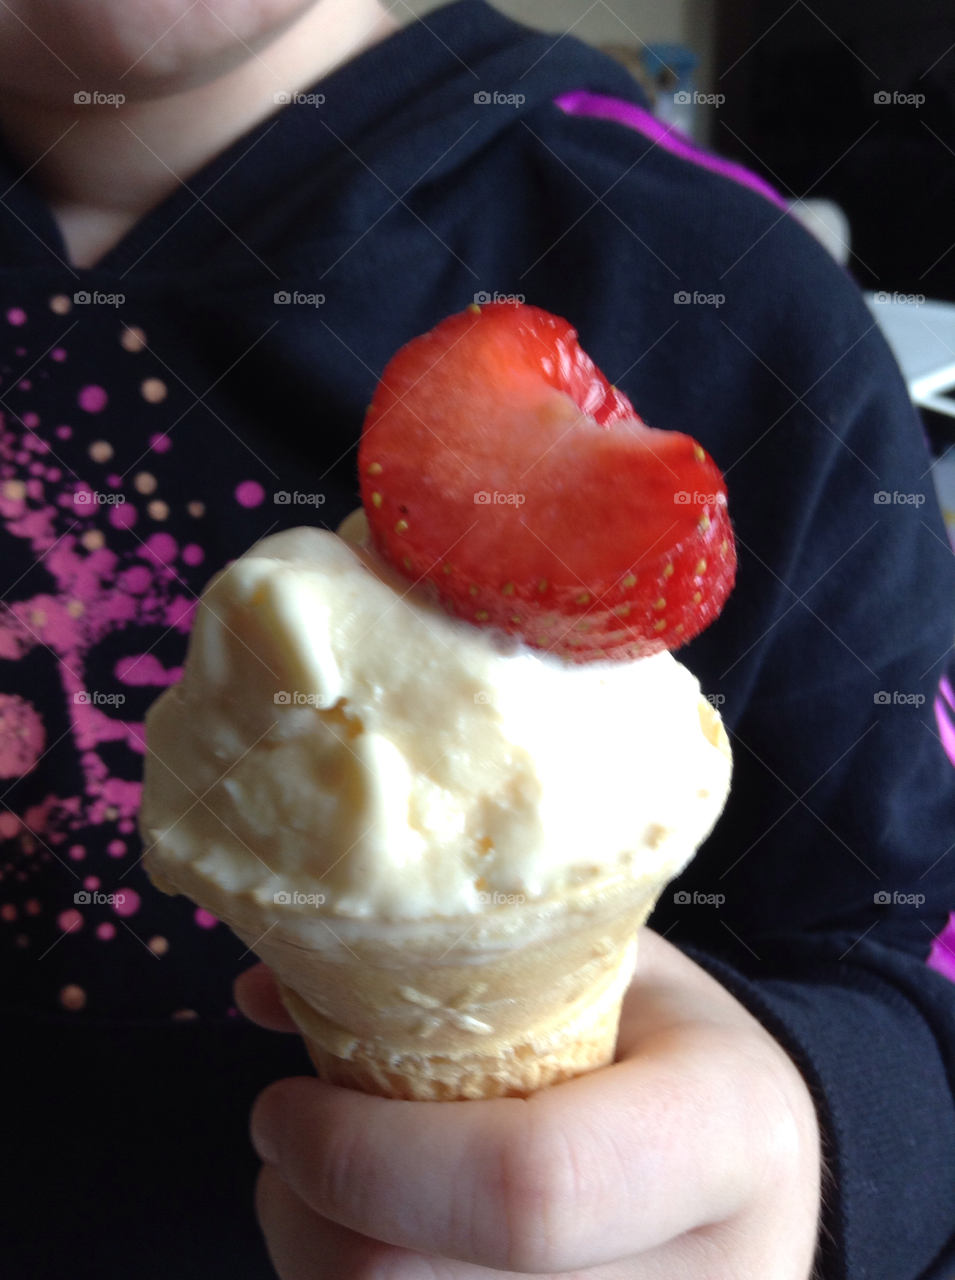 Ice cream cone. Strawberry ice cream 

